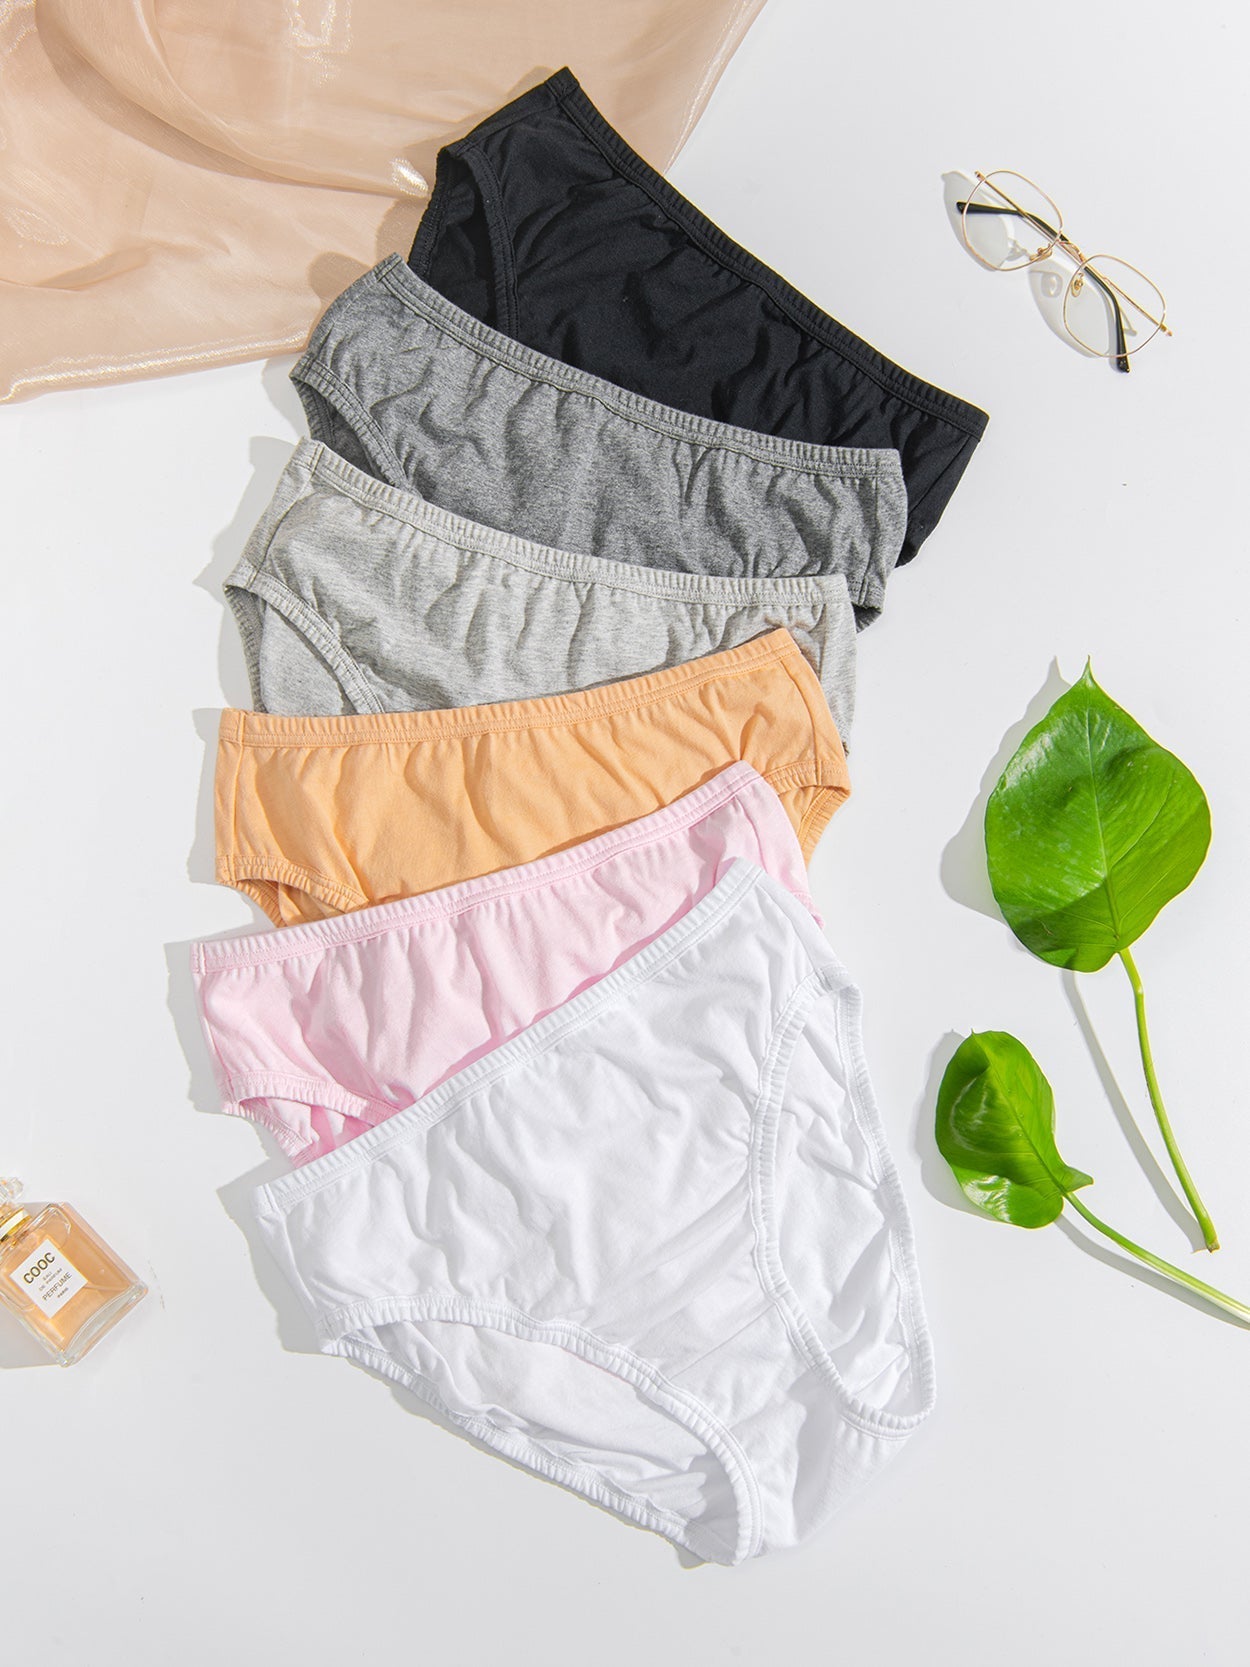 Hanes Women's Plus Size Hi Panties Pack, Moisture-Wicking